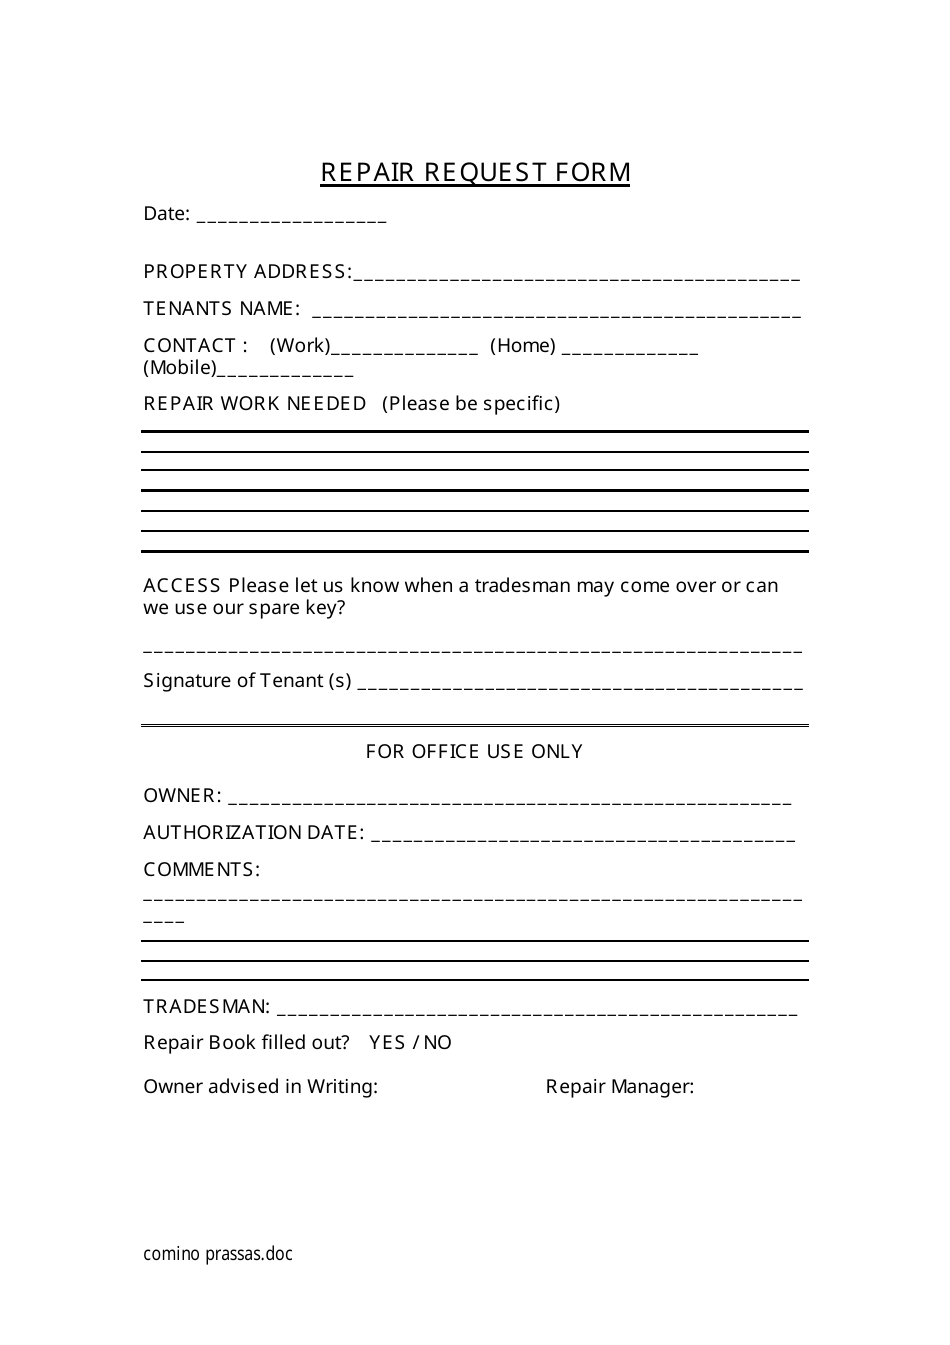 Repair Request Form - Comino Prassas, Page 1